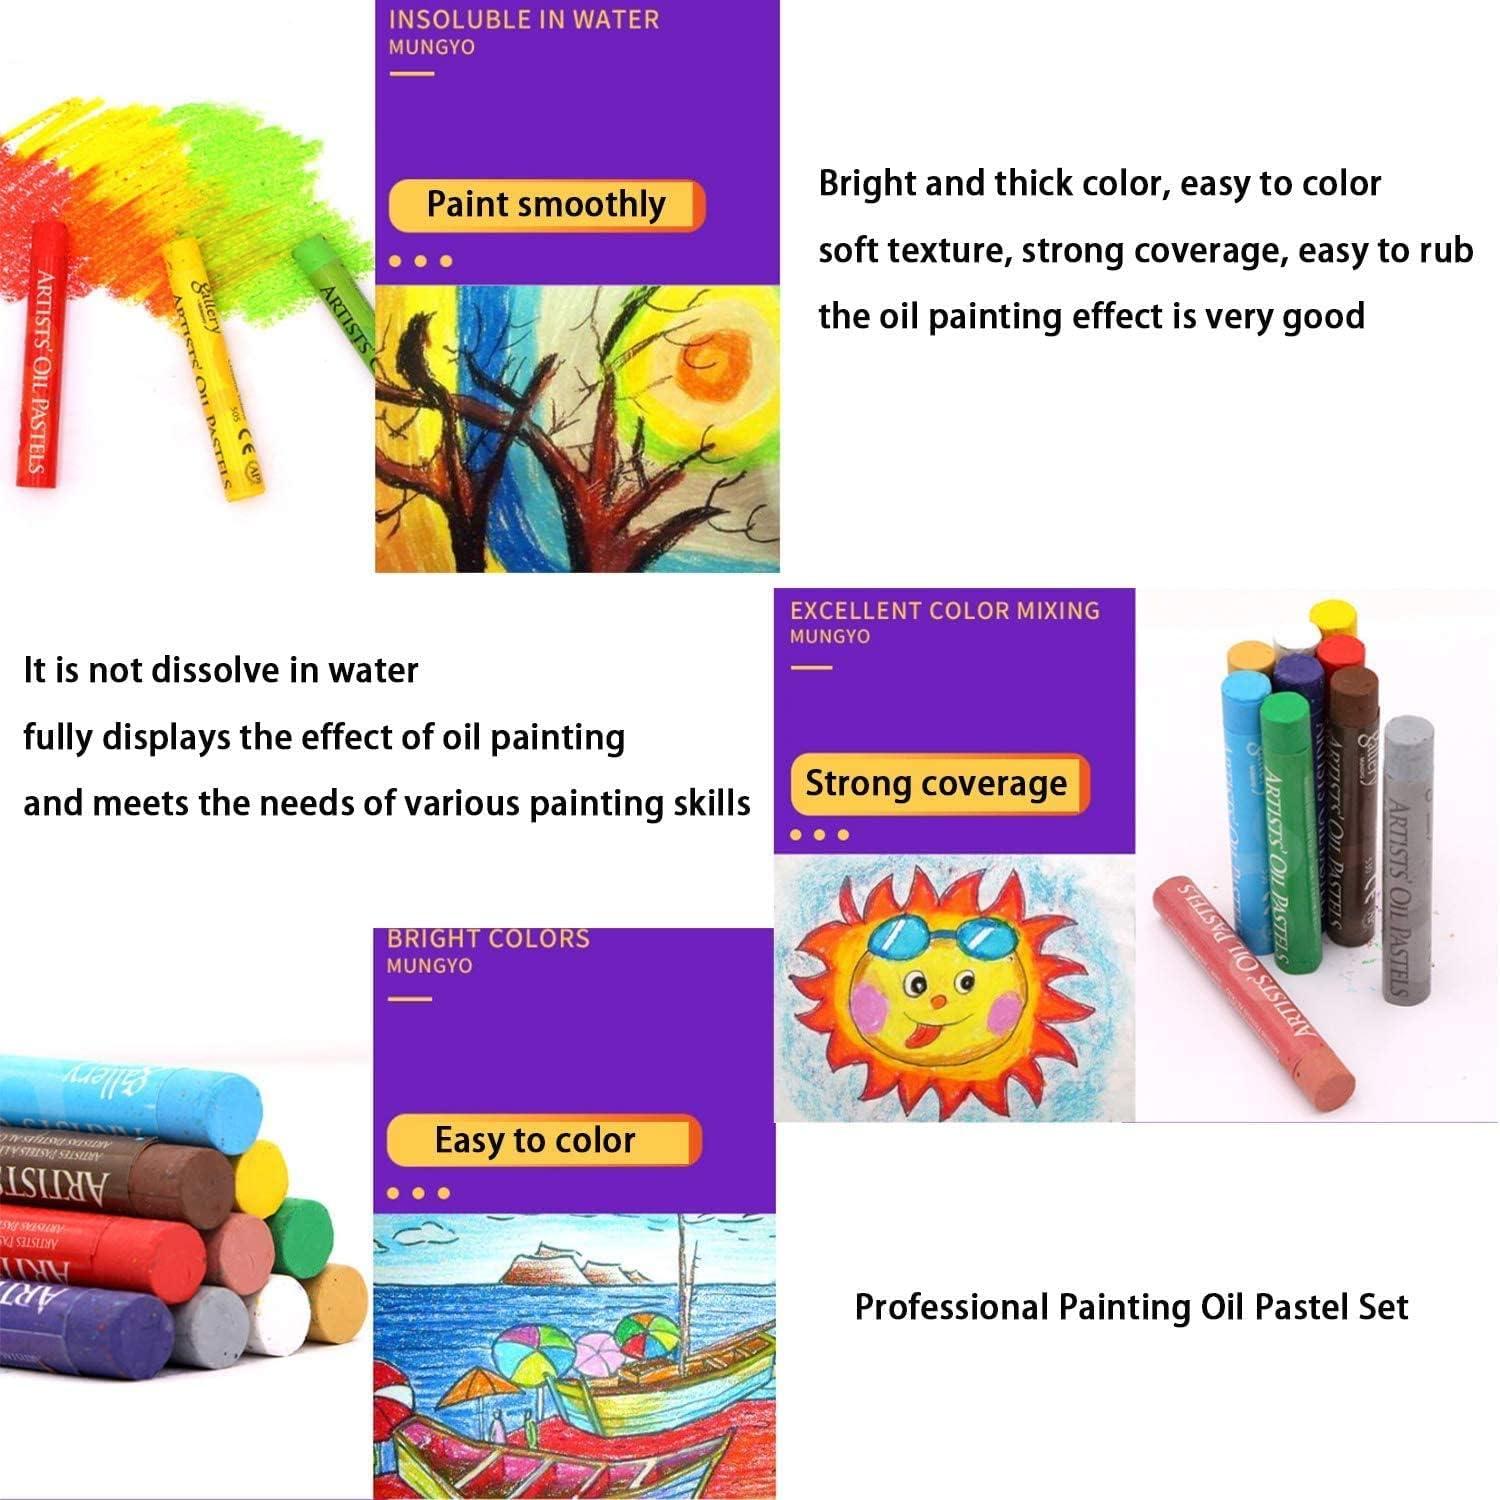 1500x Arts & Craft Supplies, Materials Educational Gift with Color Sticks  DIY Art Assorted Materials DIY Craft Set for Girls